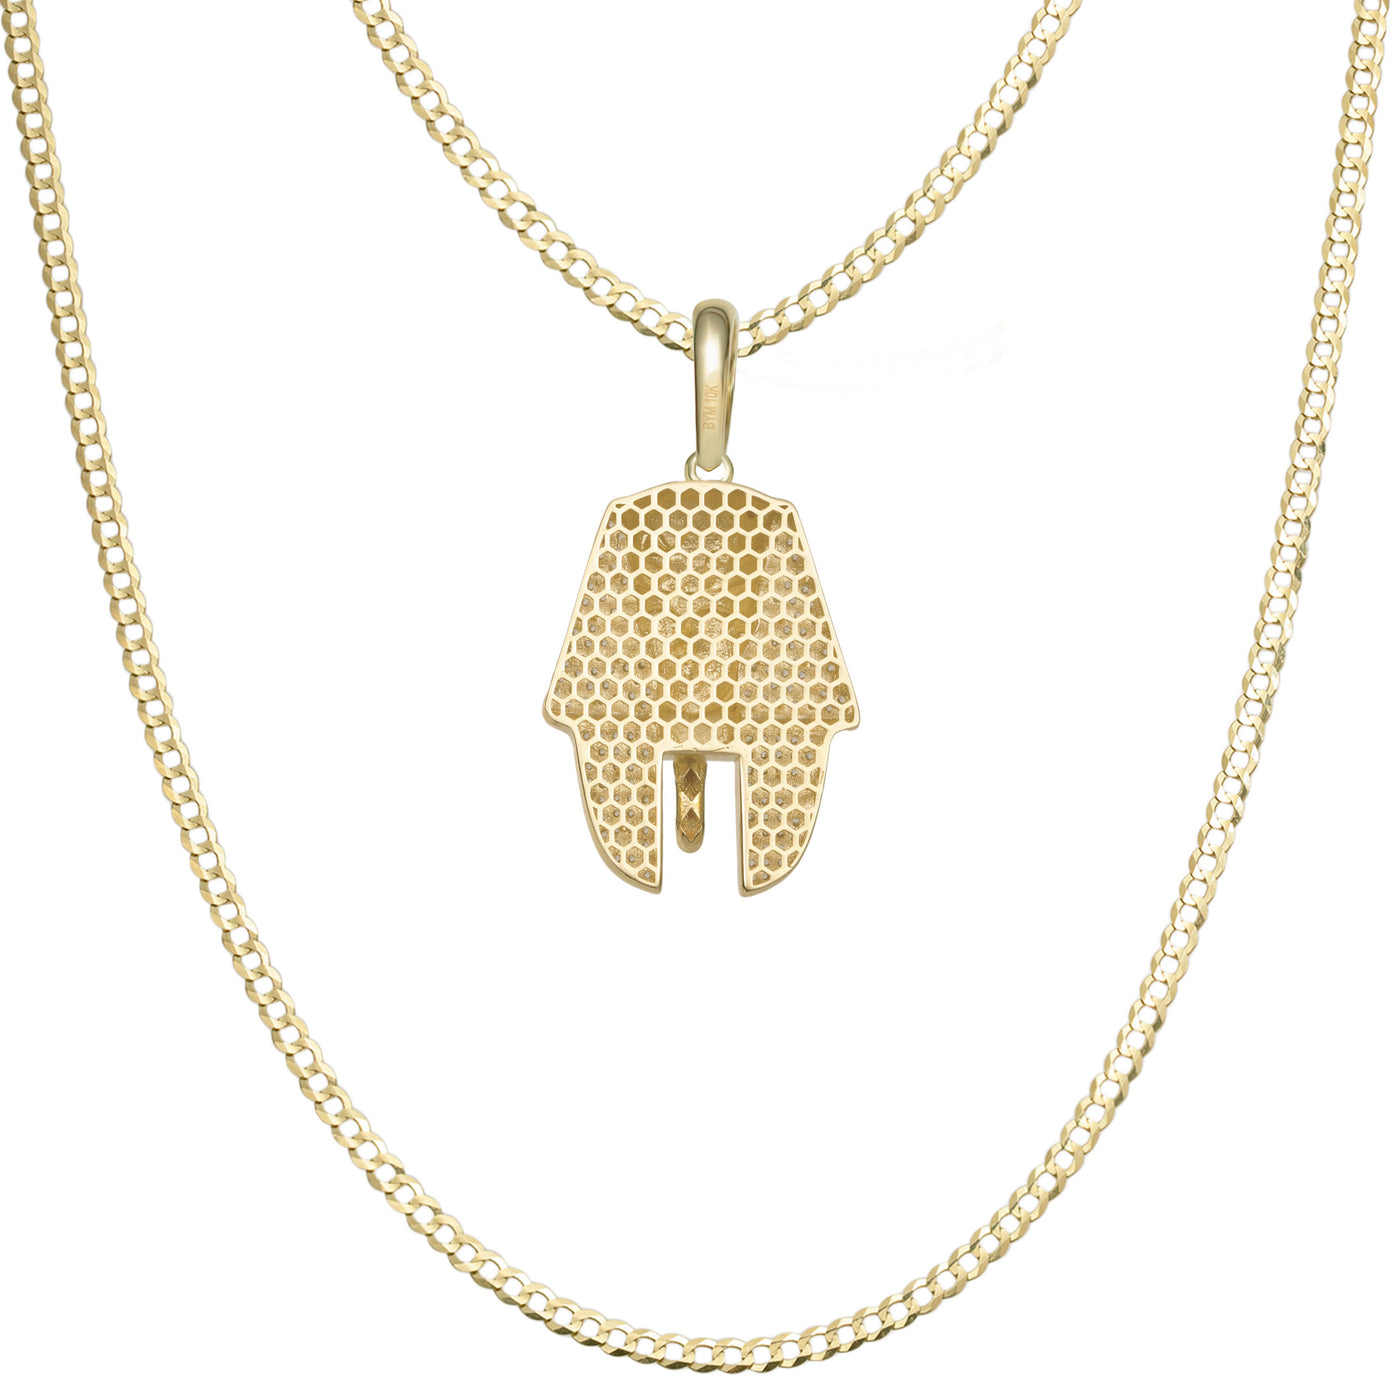 1 3/4" CZ Pharaoh Egyptian King Pendant & Chain Necklace Set 10K Yellow Gold